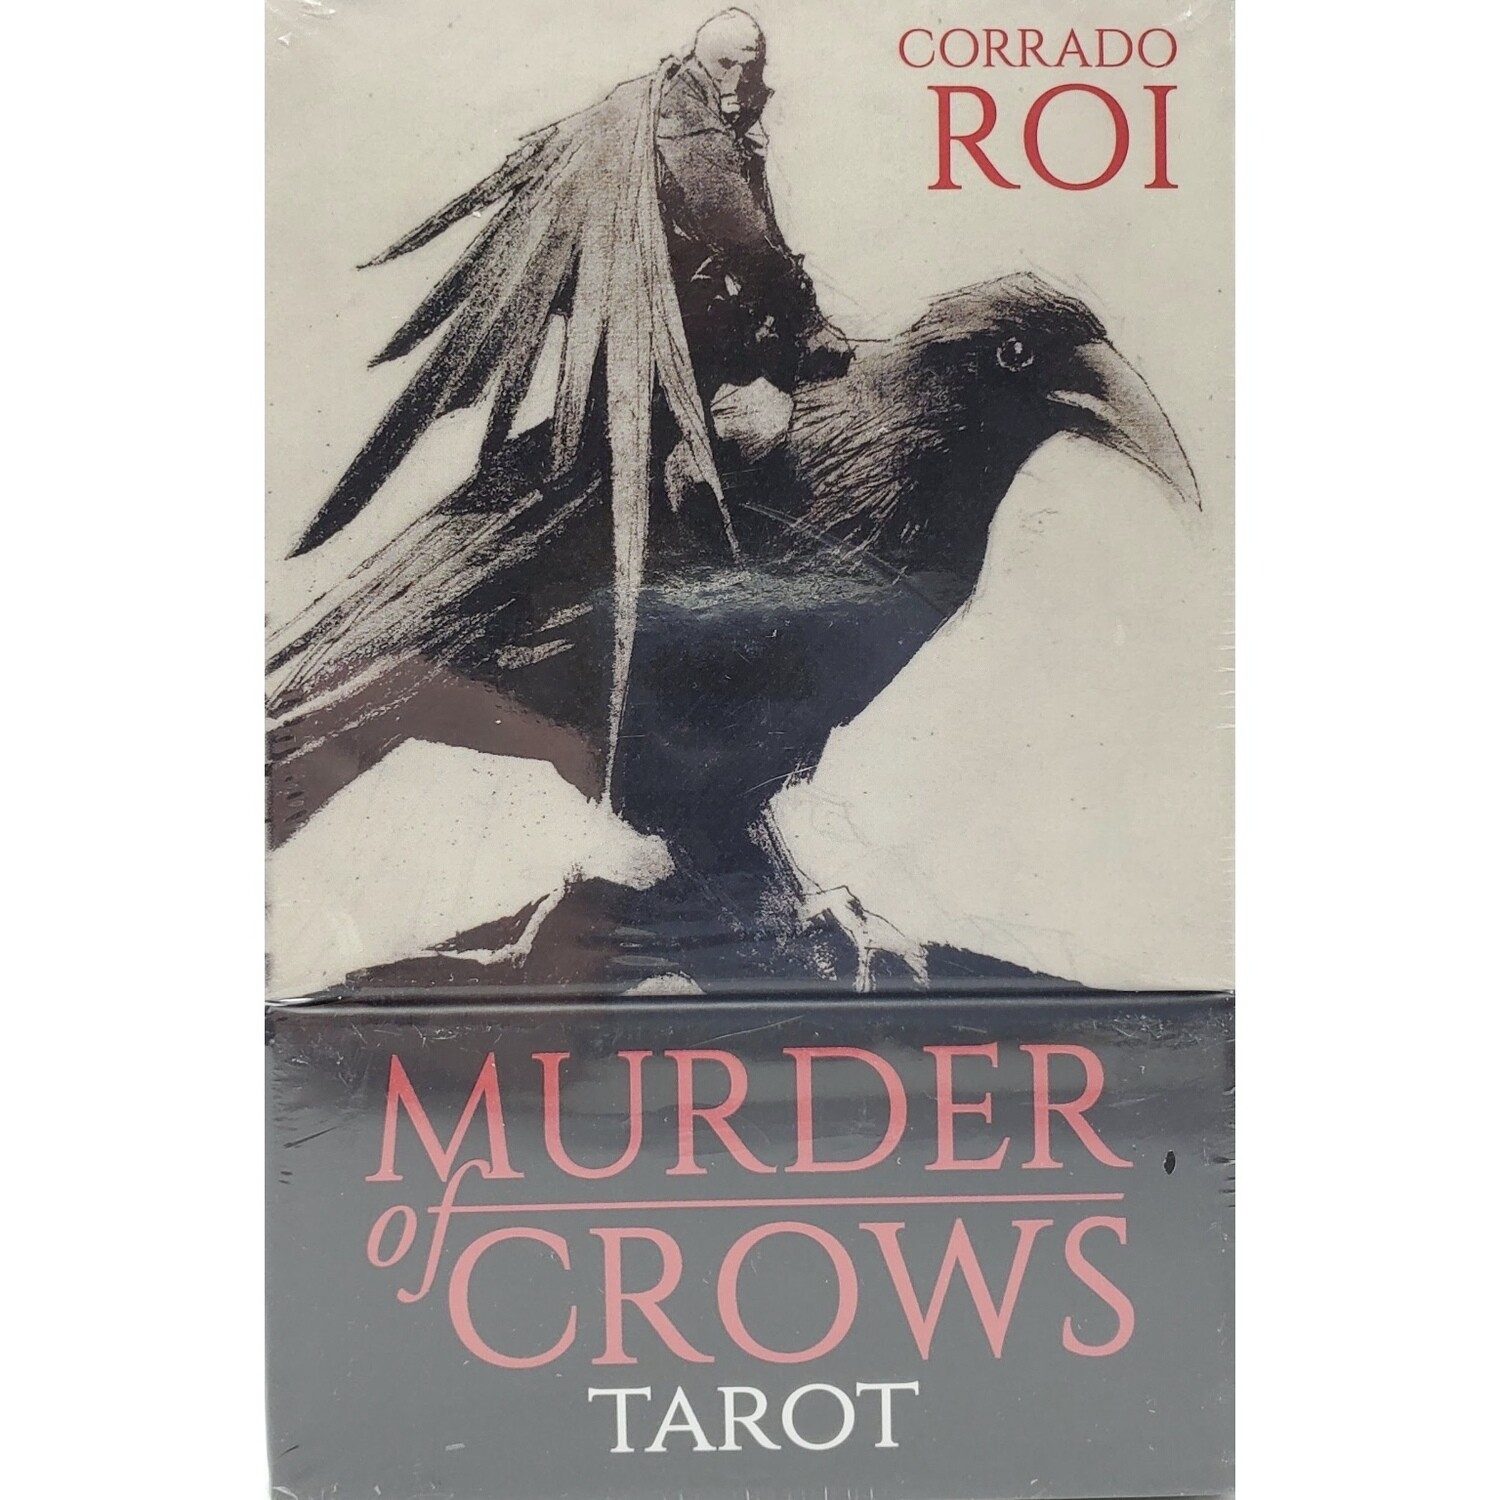 MURDER OF CROWS TAROT